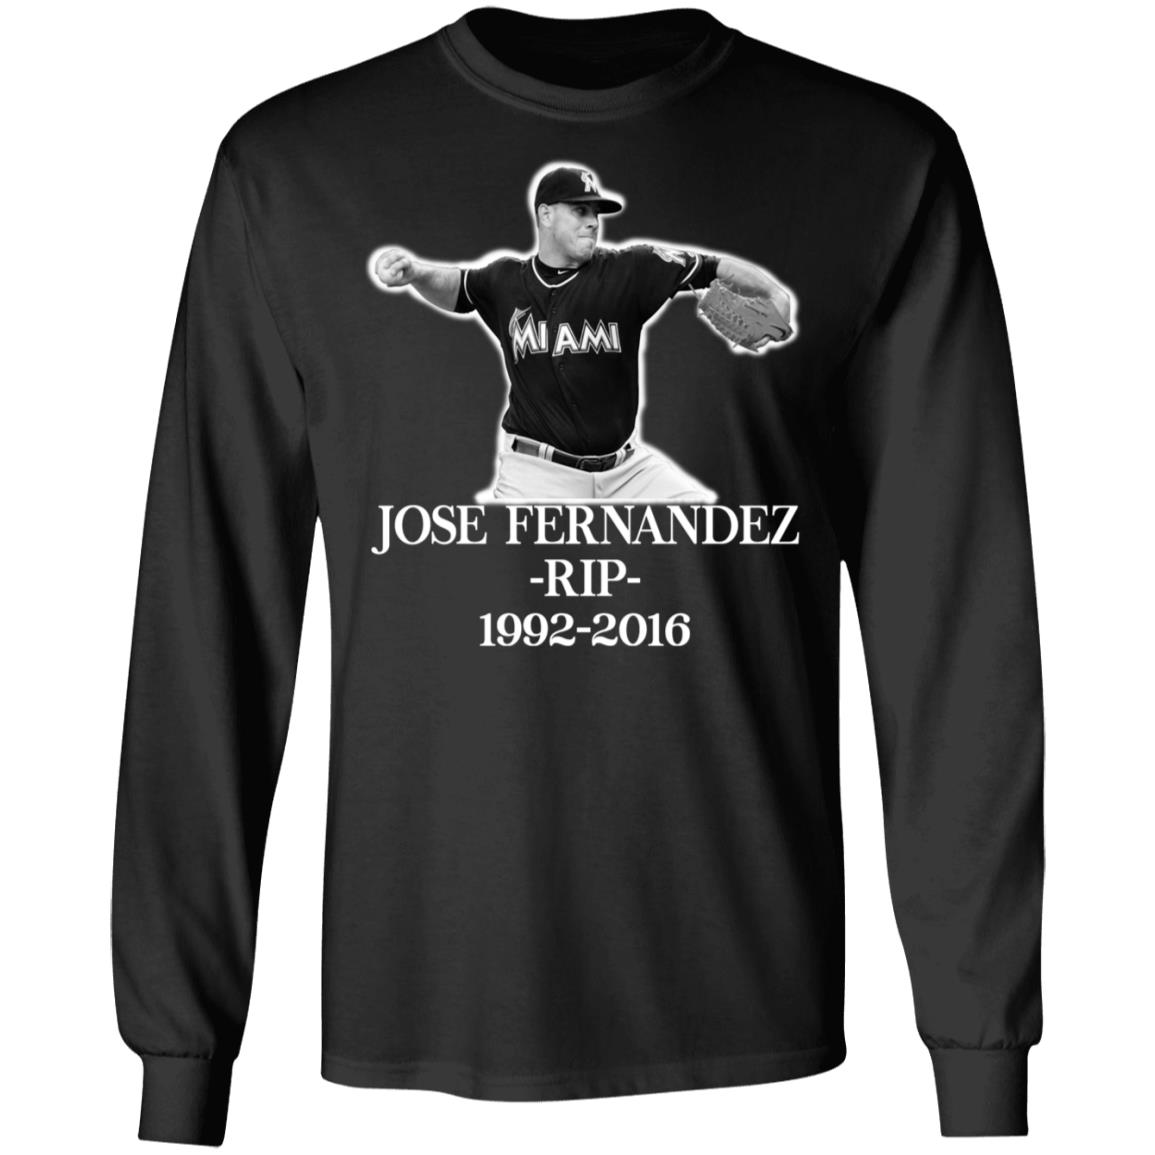  YOcioGo Men's R I P Jose Fernandez 1992-2016 T Shirts